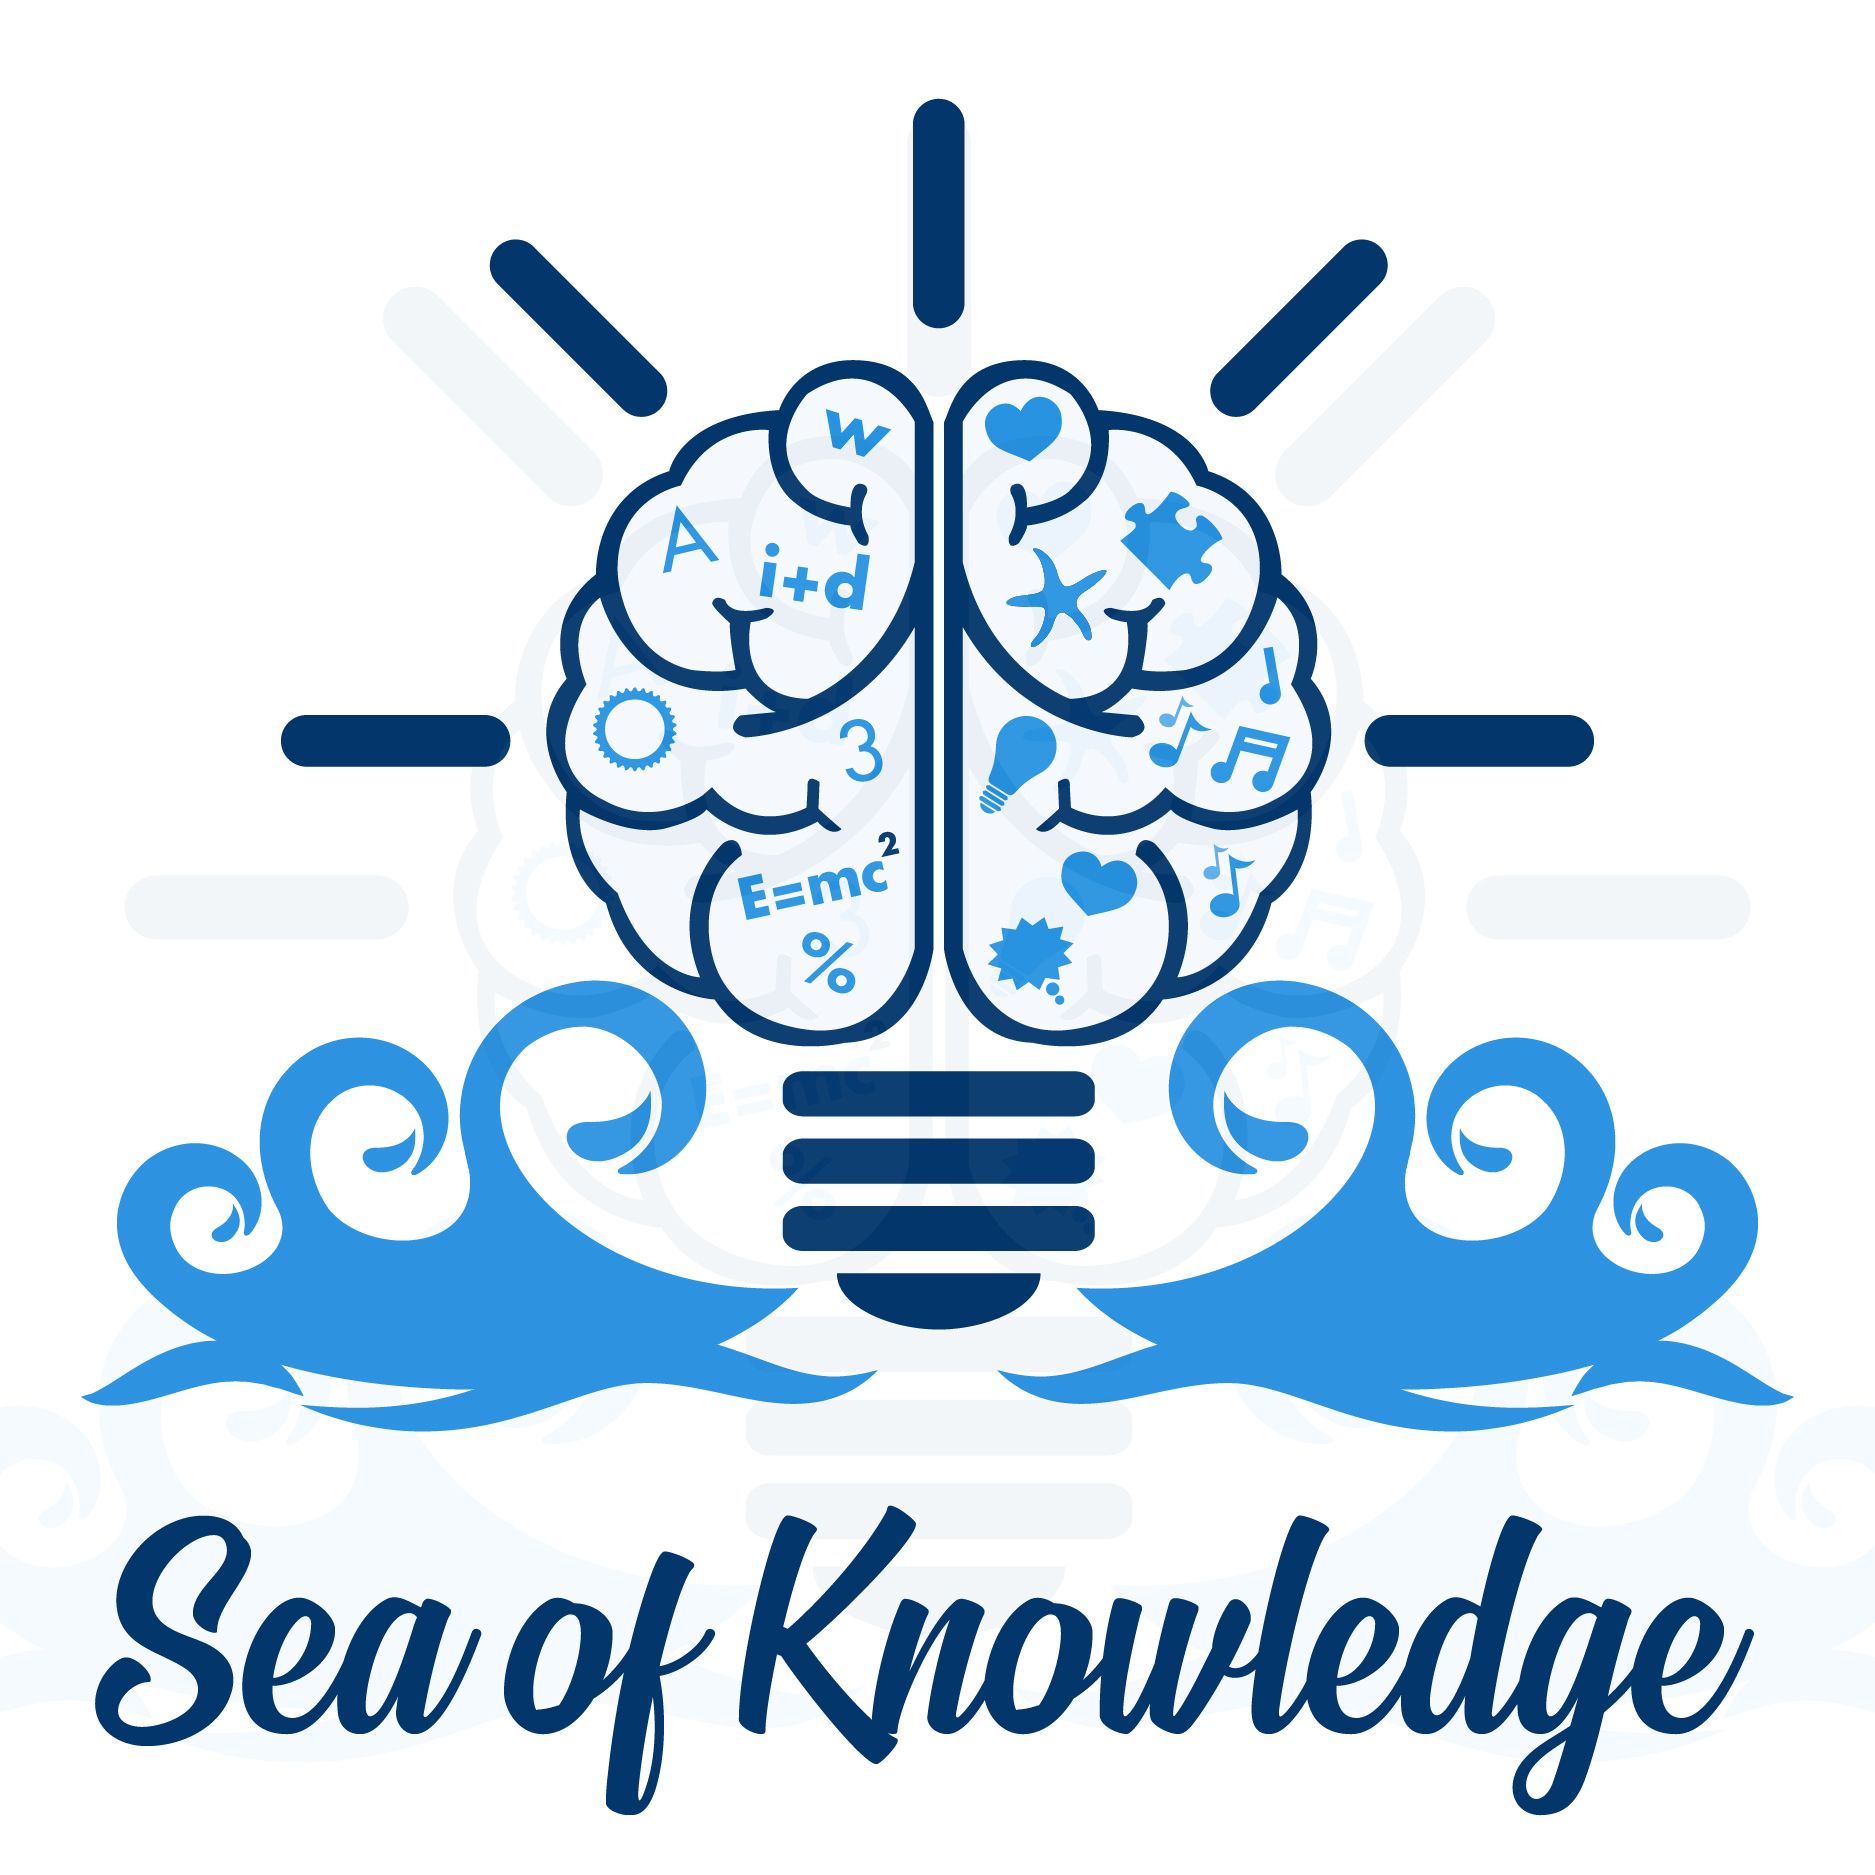 Sea of knowledge